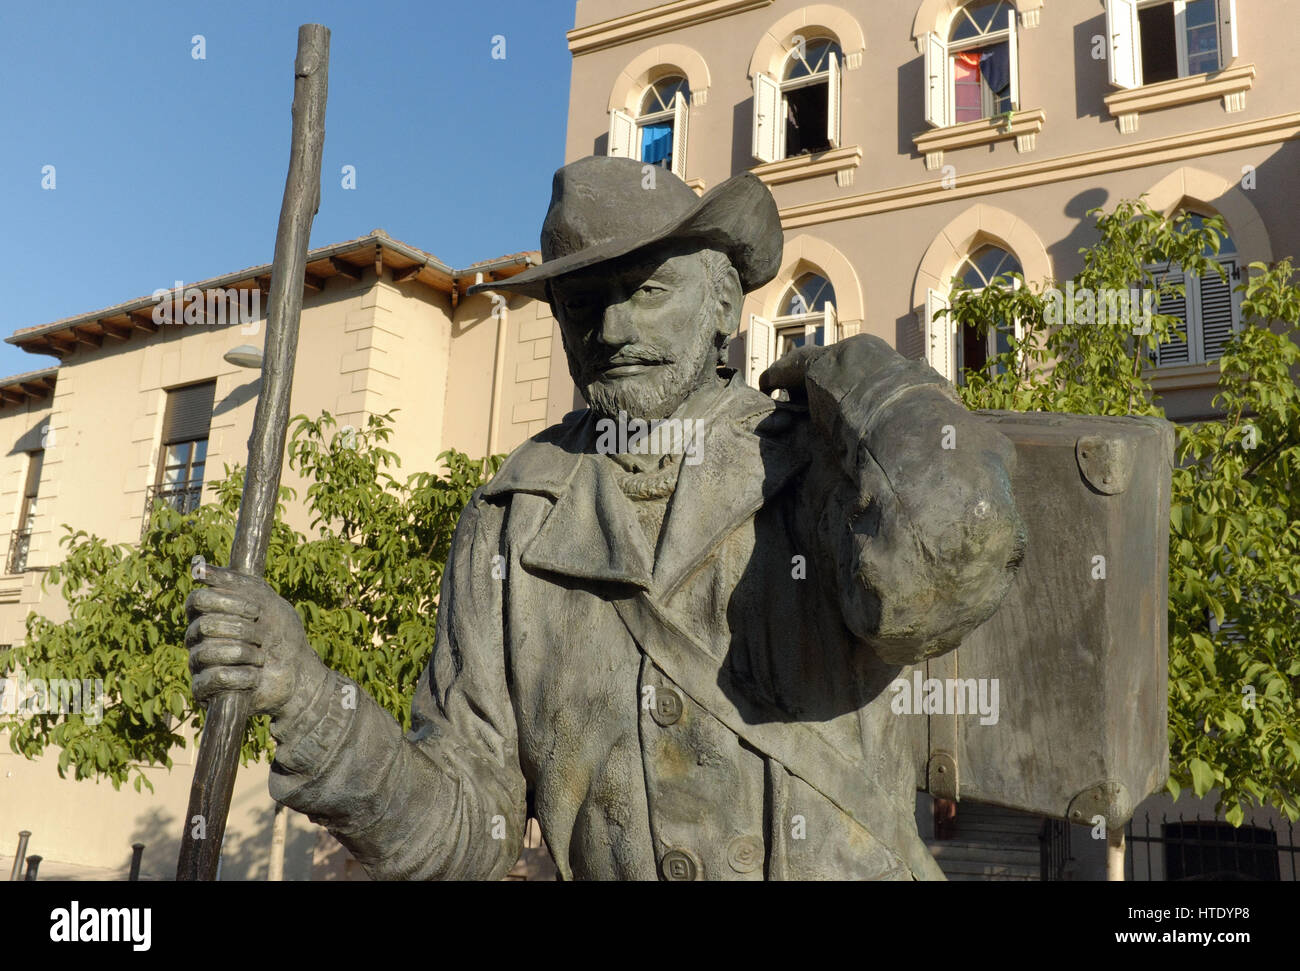 Pilgrim carrying bag statue outside the municipal alburgue in Astorga, Spain along the Camino Frances. Stock Photo